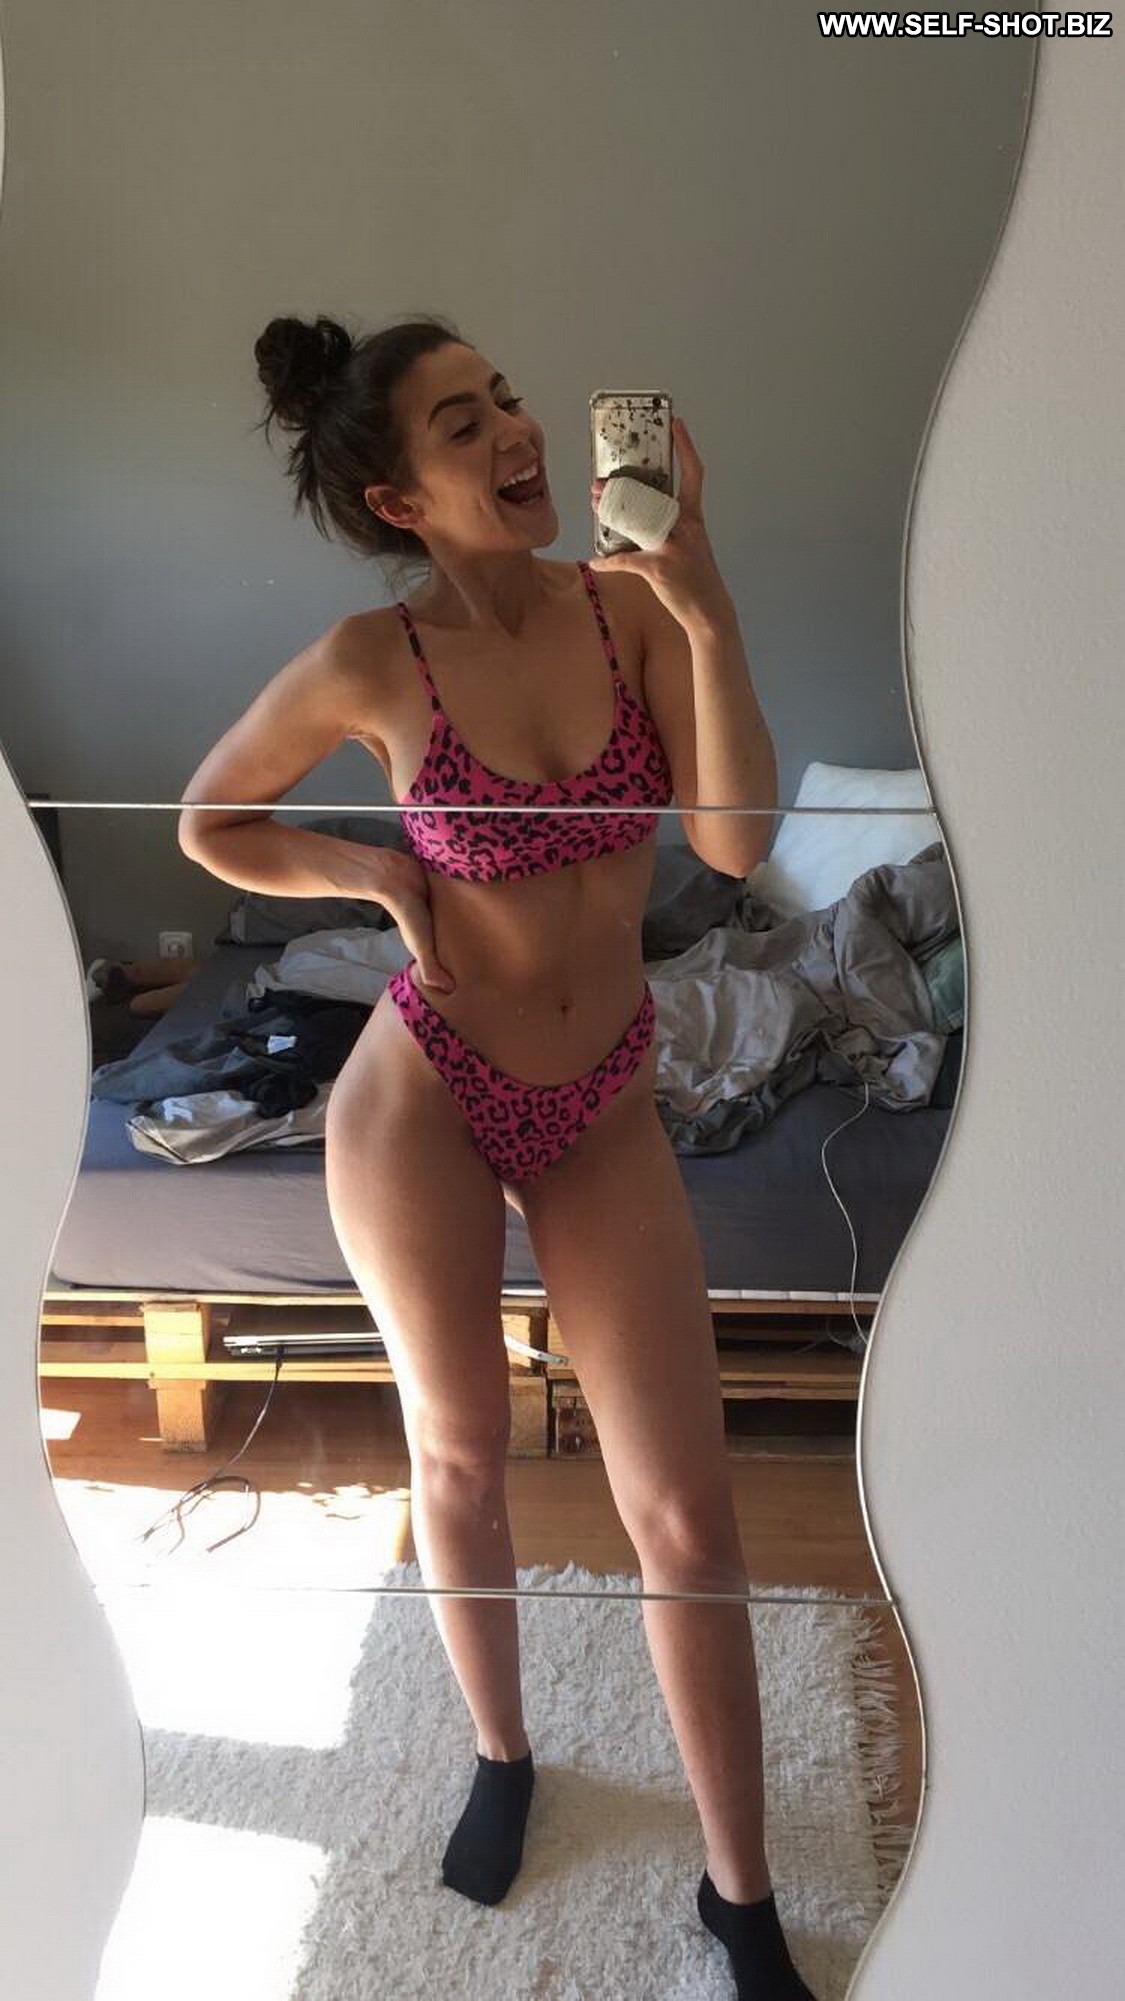 Neoma Bra Undies Tits Sex Leaked Fit Selfie Yoga Pants Girl Czech